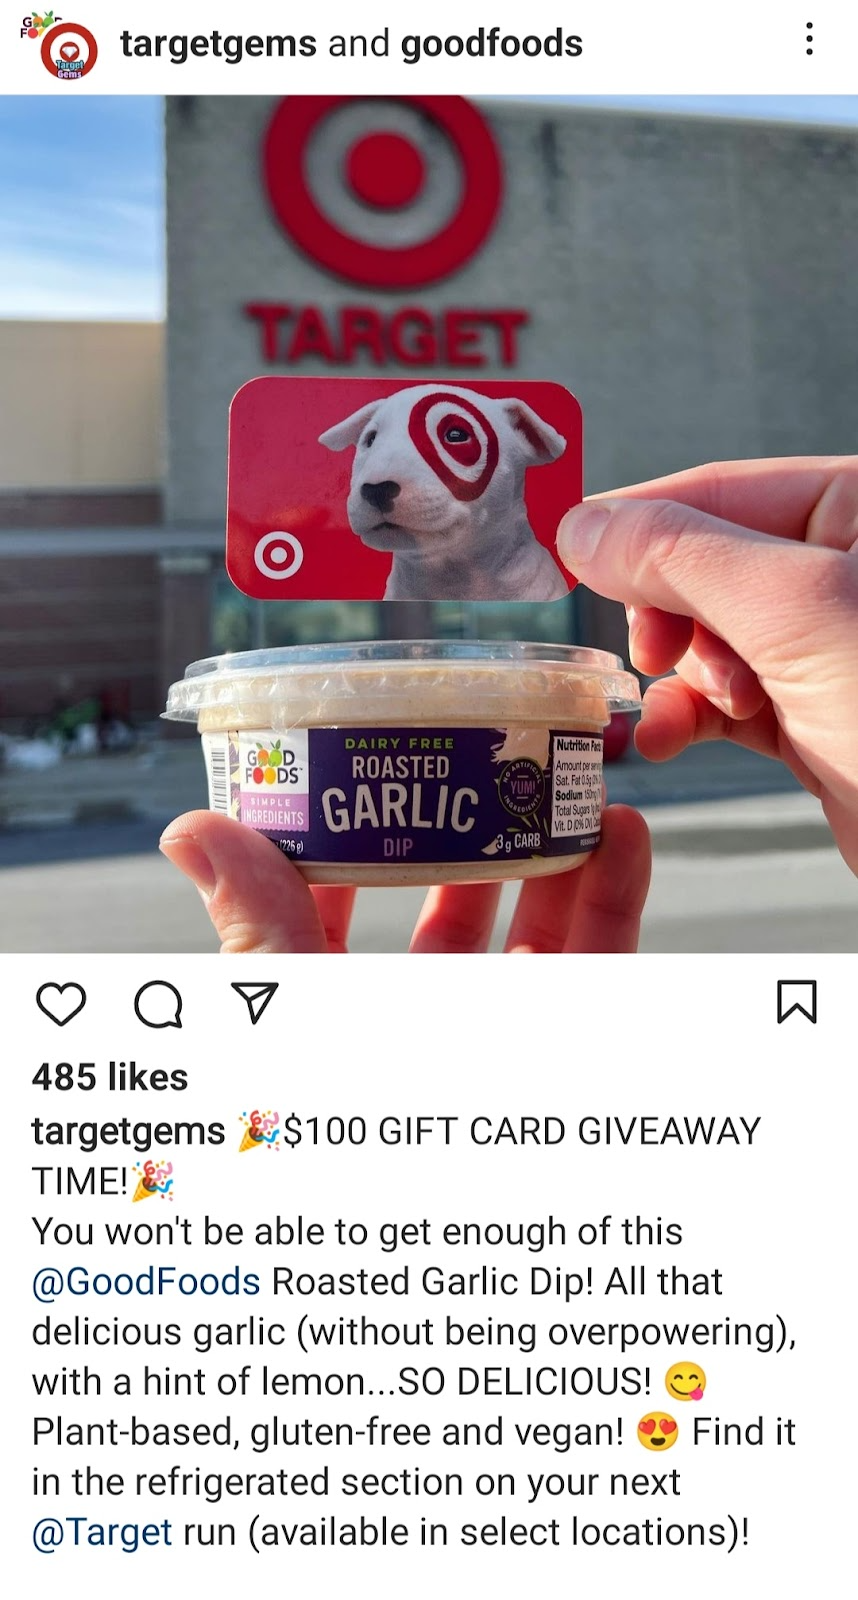 Instagram partnership between Good Foods and Target Gems